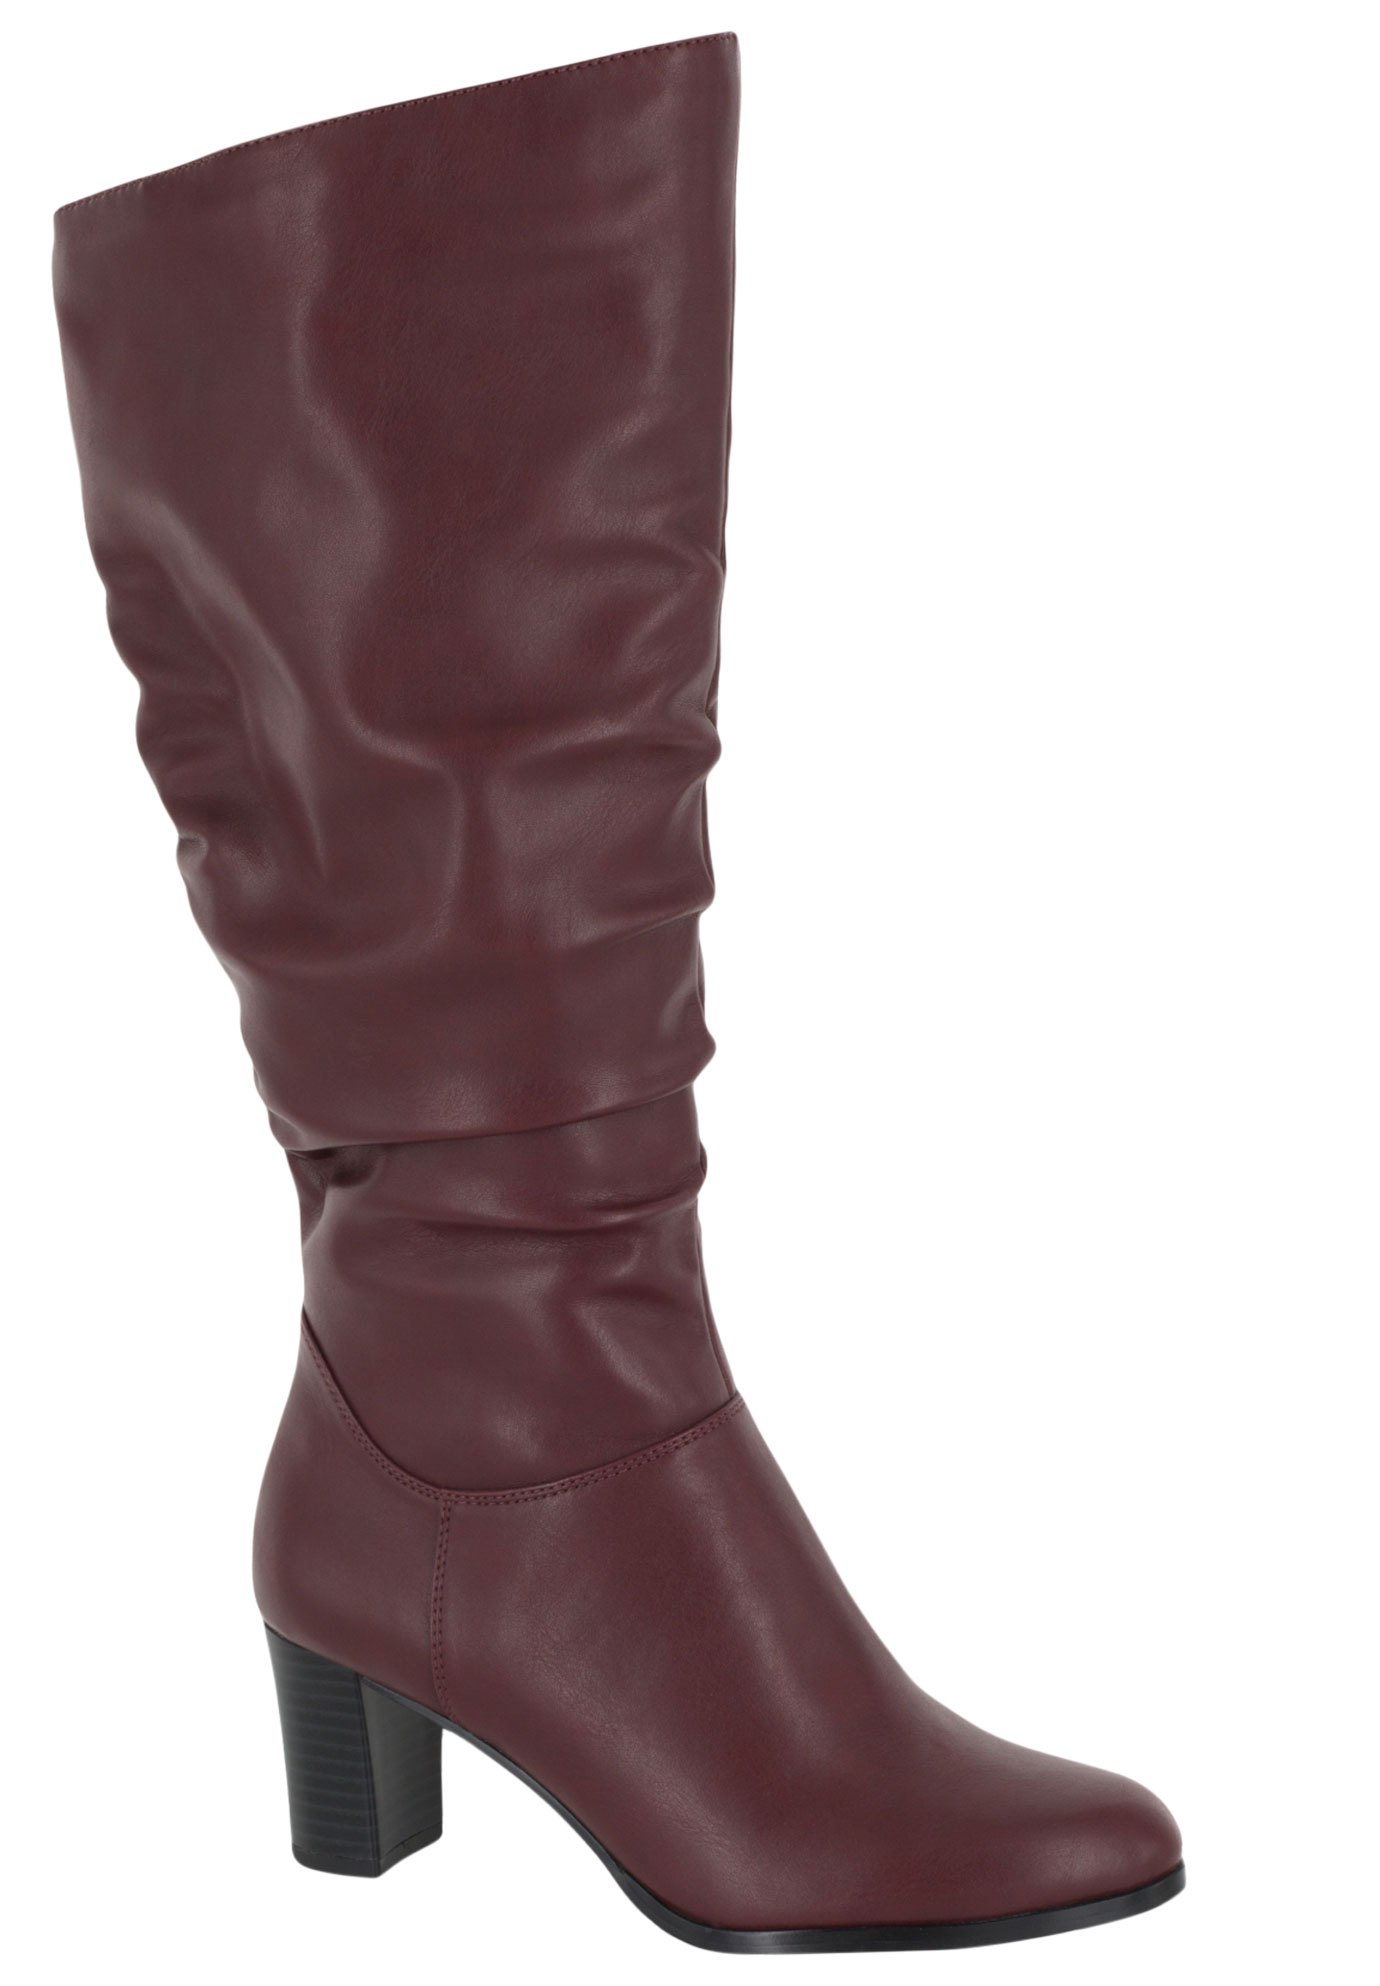 burgundy wide calf boots